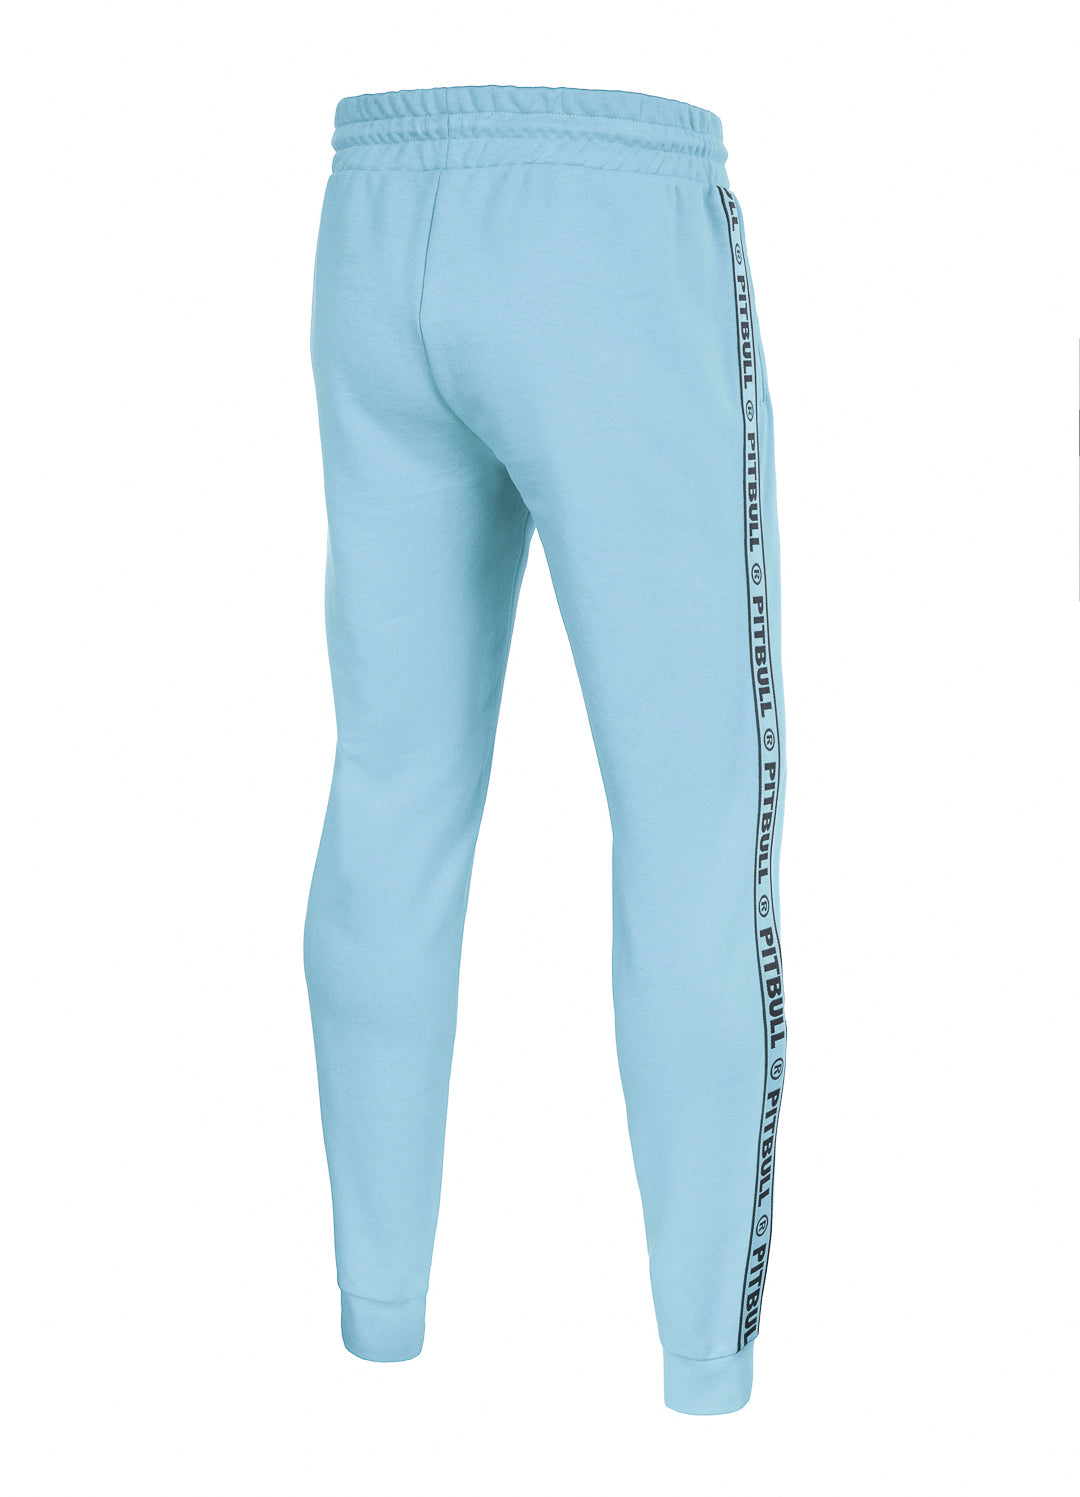 Jogging Pants MERIDAN Light Blue - Pitbull West Coast International Store 